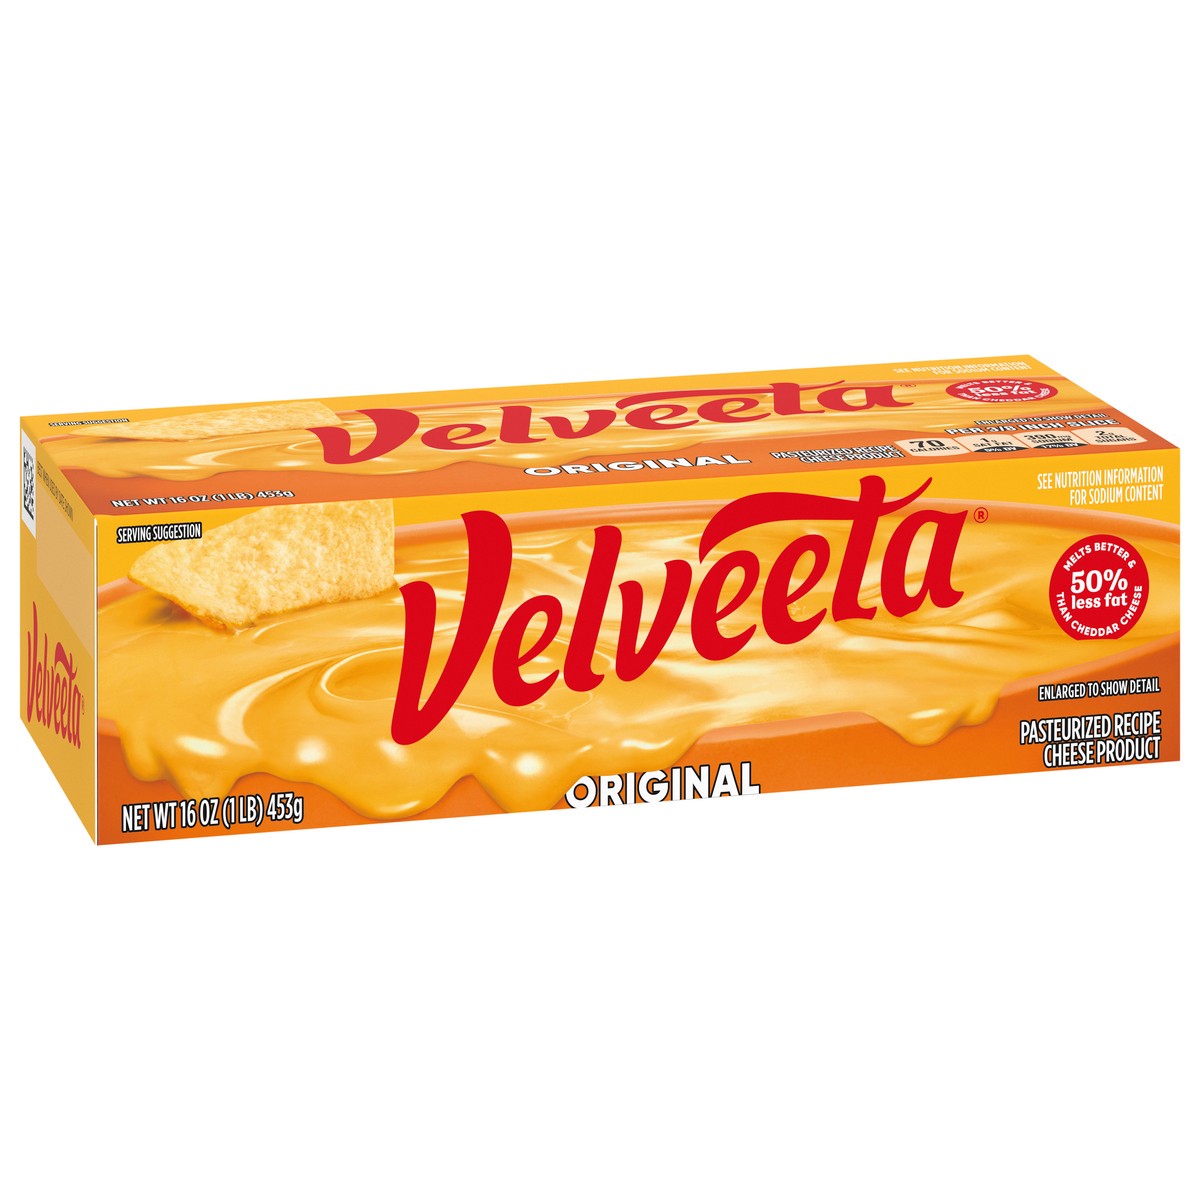 slide 9 of 9, Velveeta Original Pasteurized Recipe Cheese Product, 16 oz Block, 16 oz